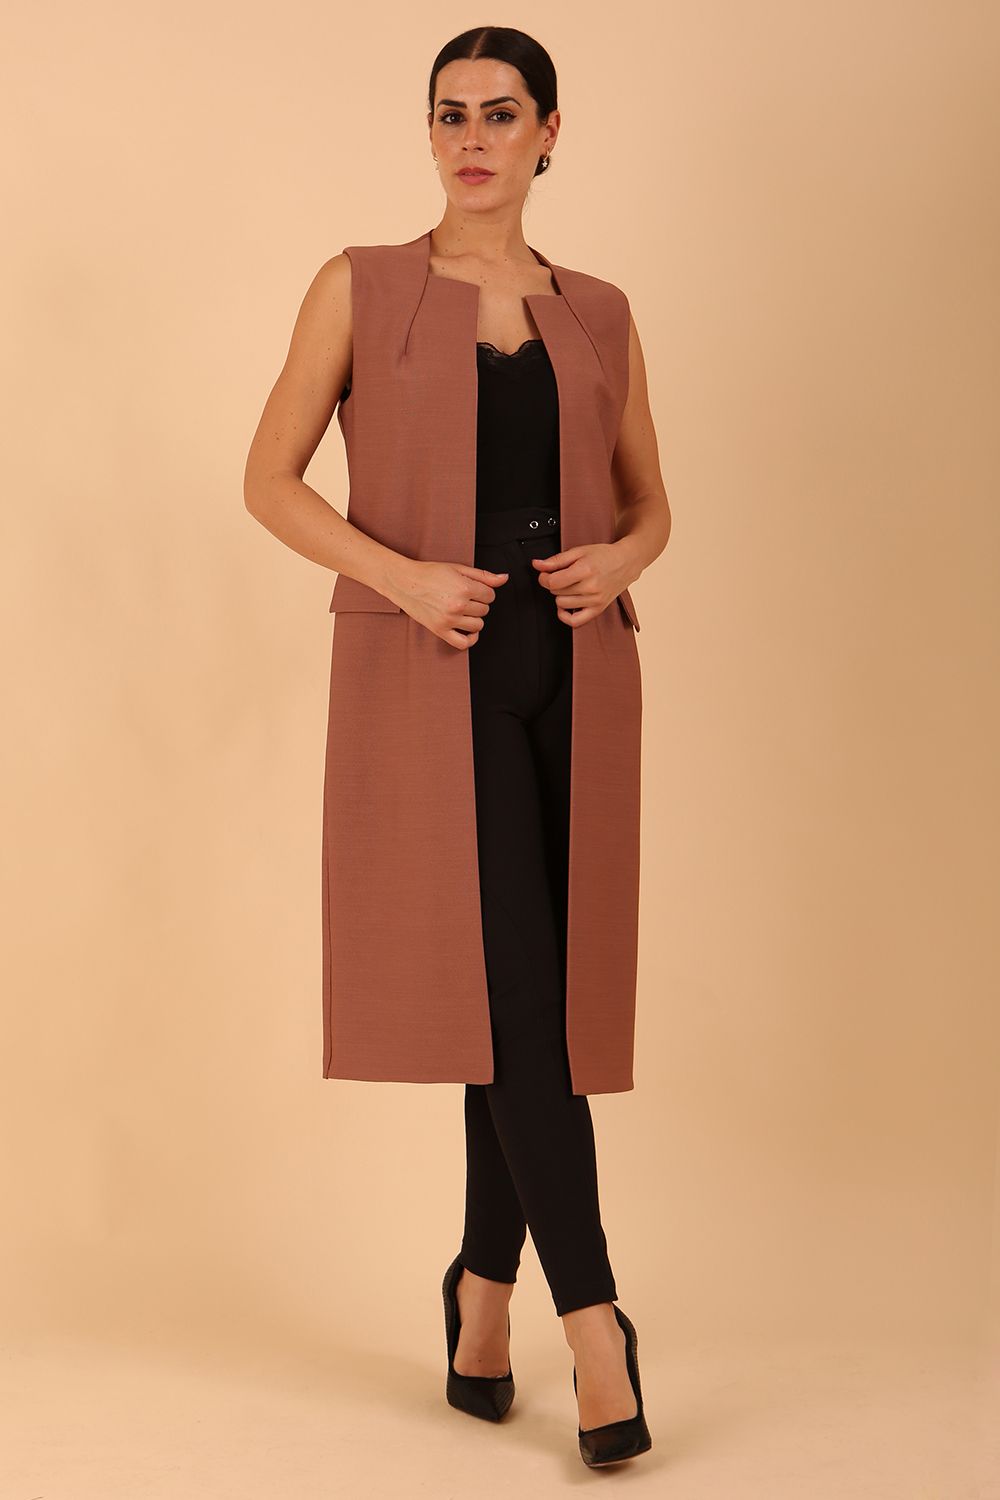 model wearing a divacatwalk Seed Harvard Sleeveless Coat midi length in Amethyst Purple colour front